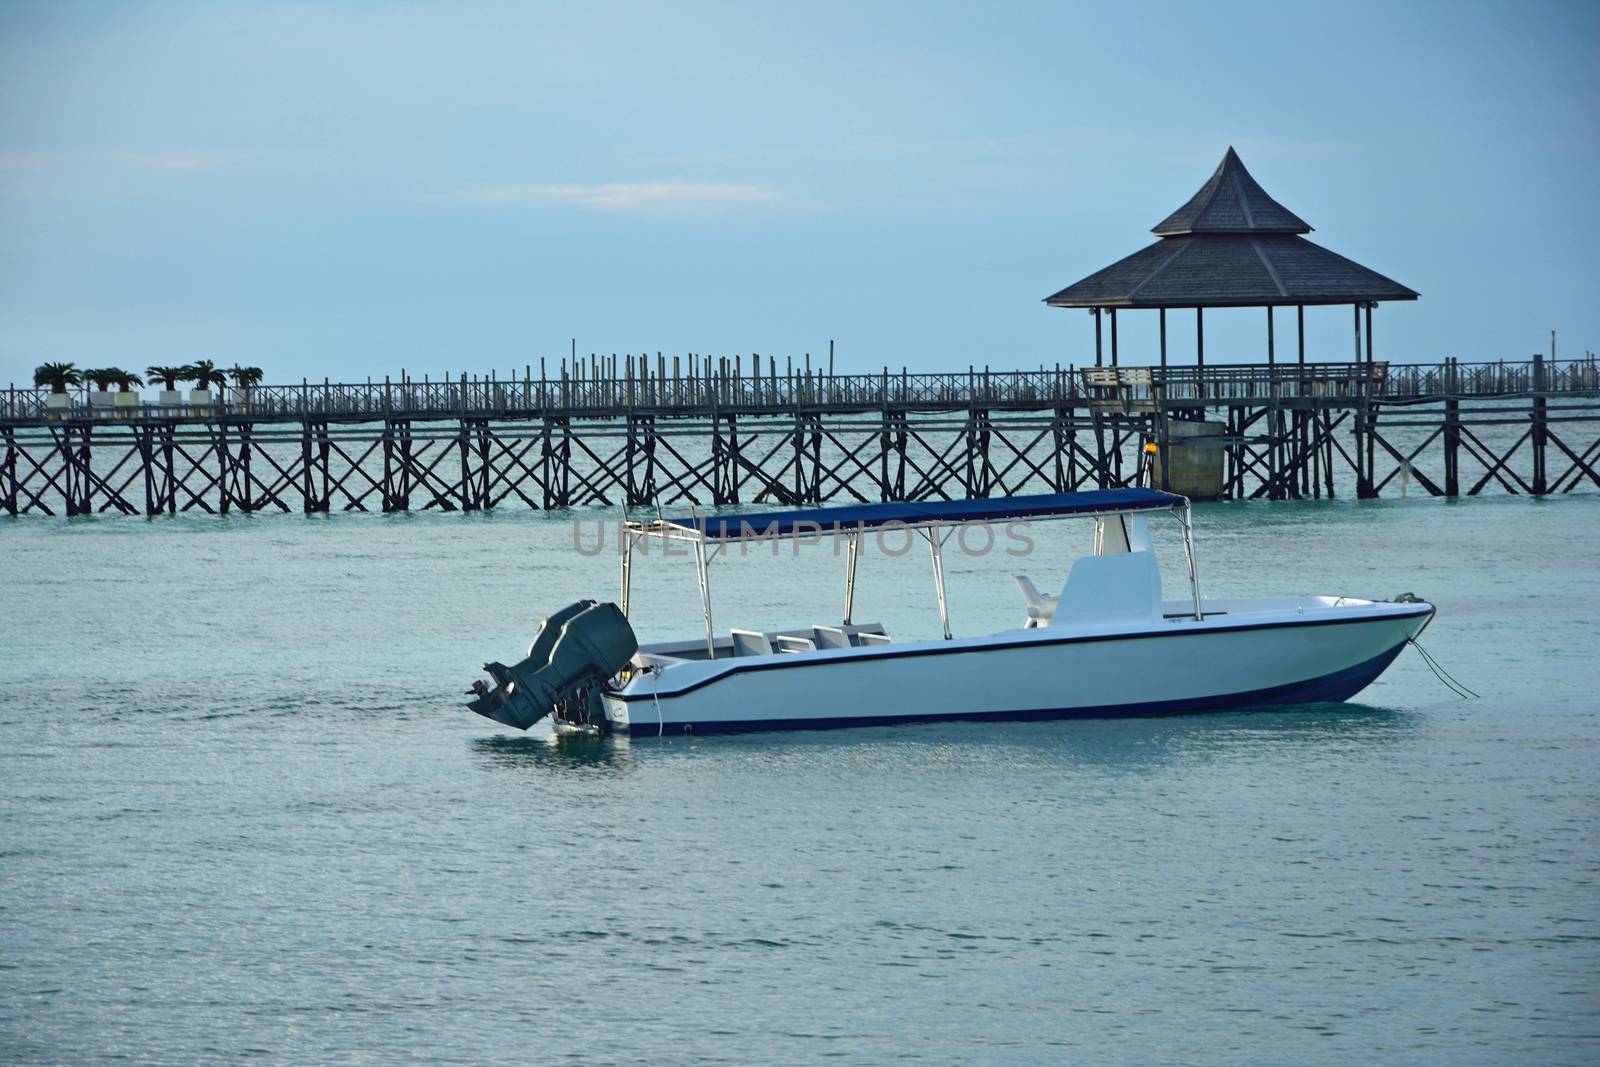 boat on crystal water, sipadan borneo malaysia by think4photop